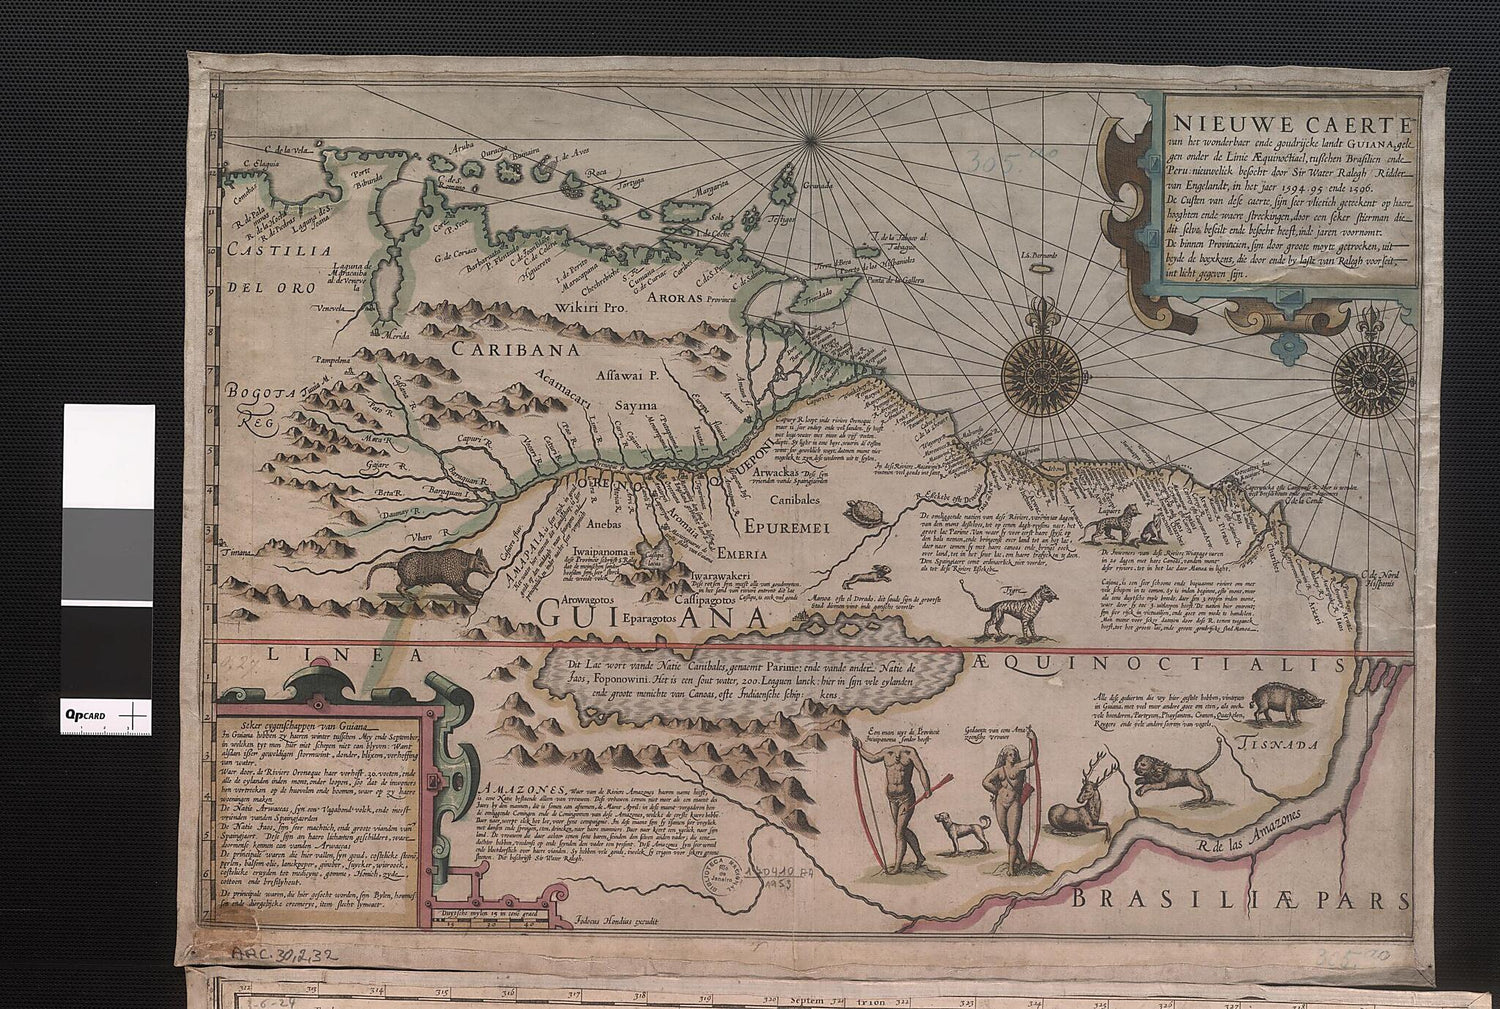 This old map of New Map of the Wonderful, Large and Rich Land of Guiana. (Nieuwe Caerte Van Het Wonderbaer Ende Goudrycke Landt Guiana) from 1598 was created by Jodocus Hondius in 1598